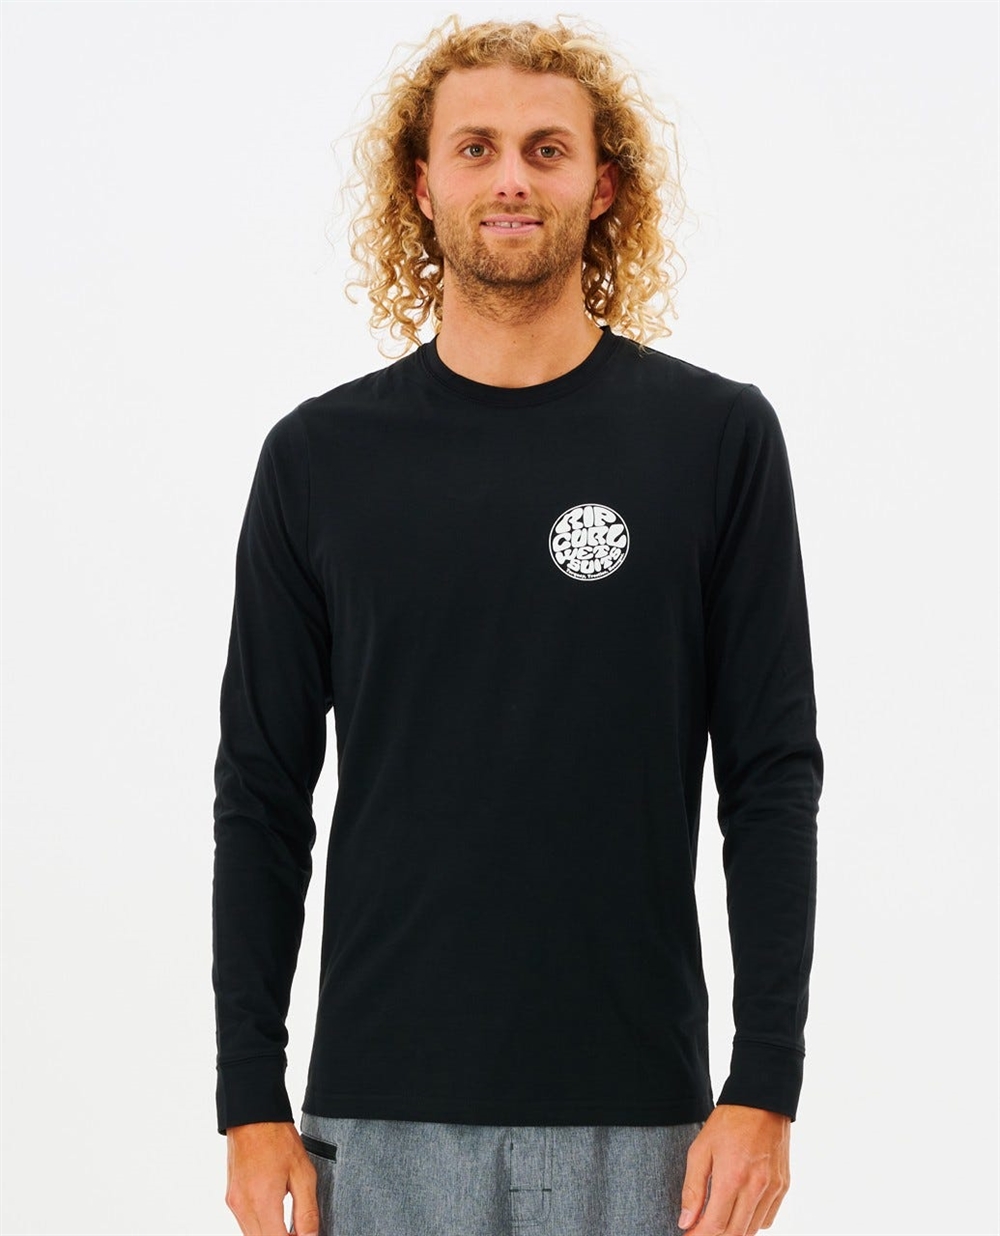 Rip Curl Icons of Surf UPF L/S T-Shirt - Black